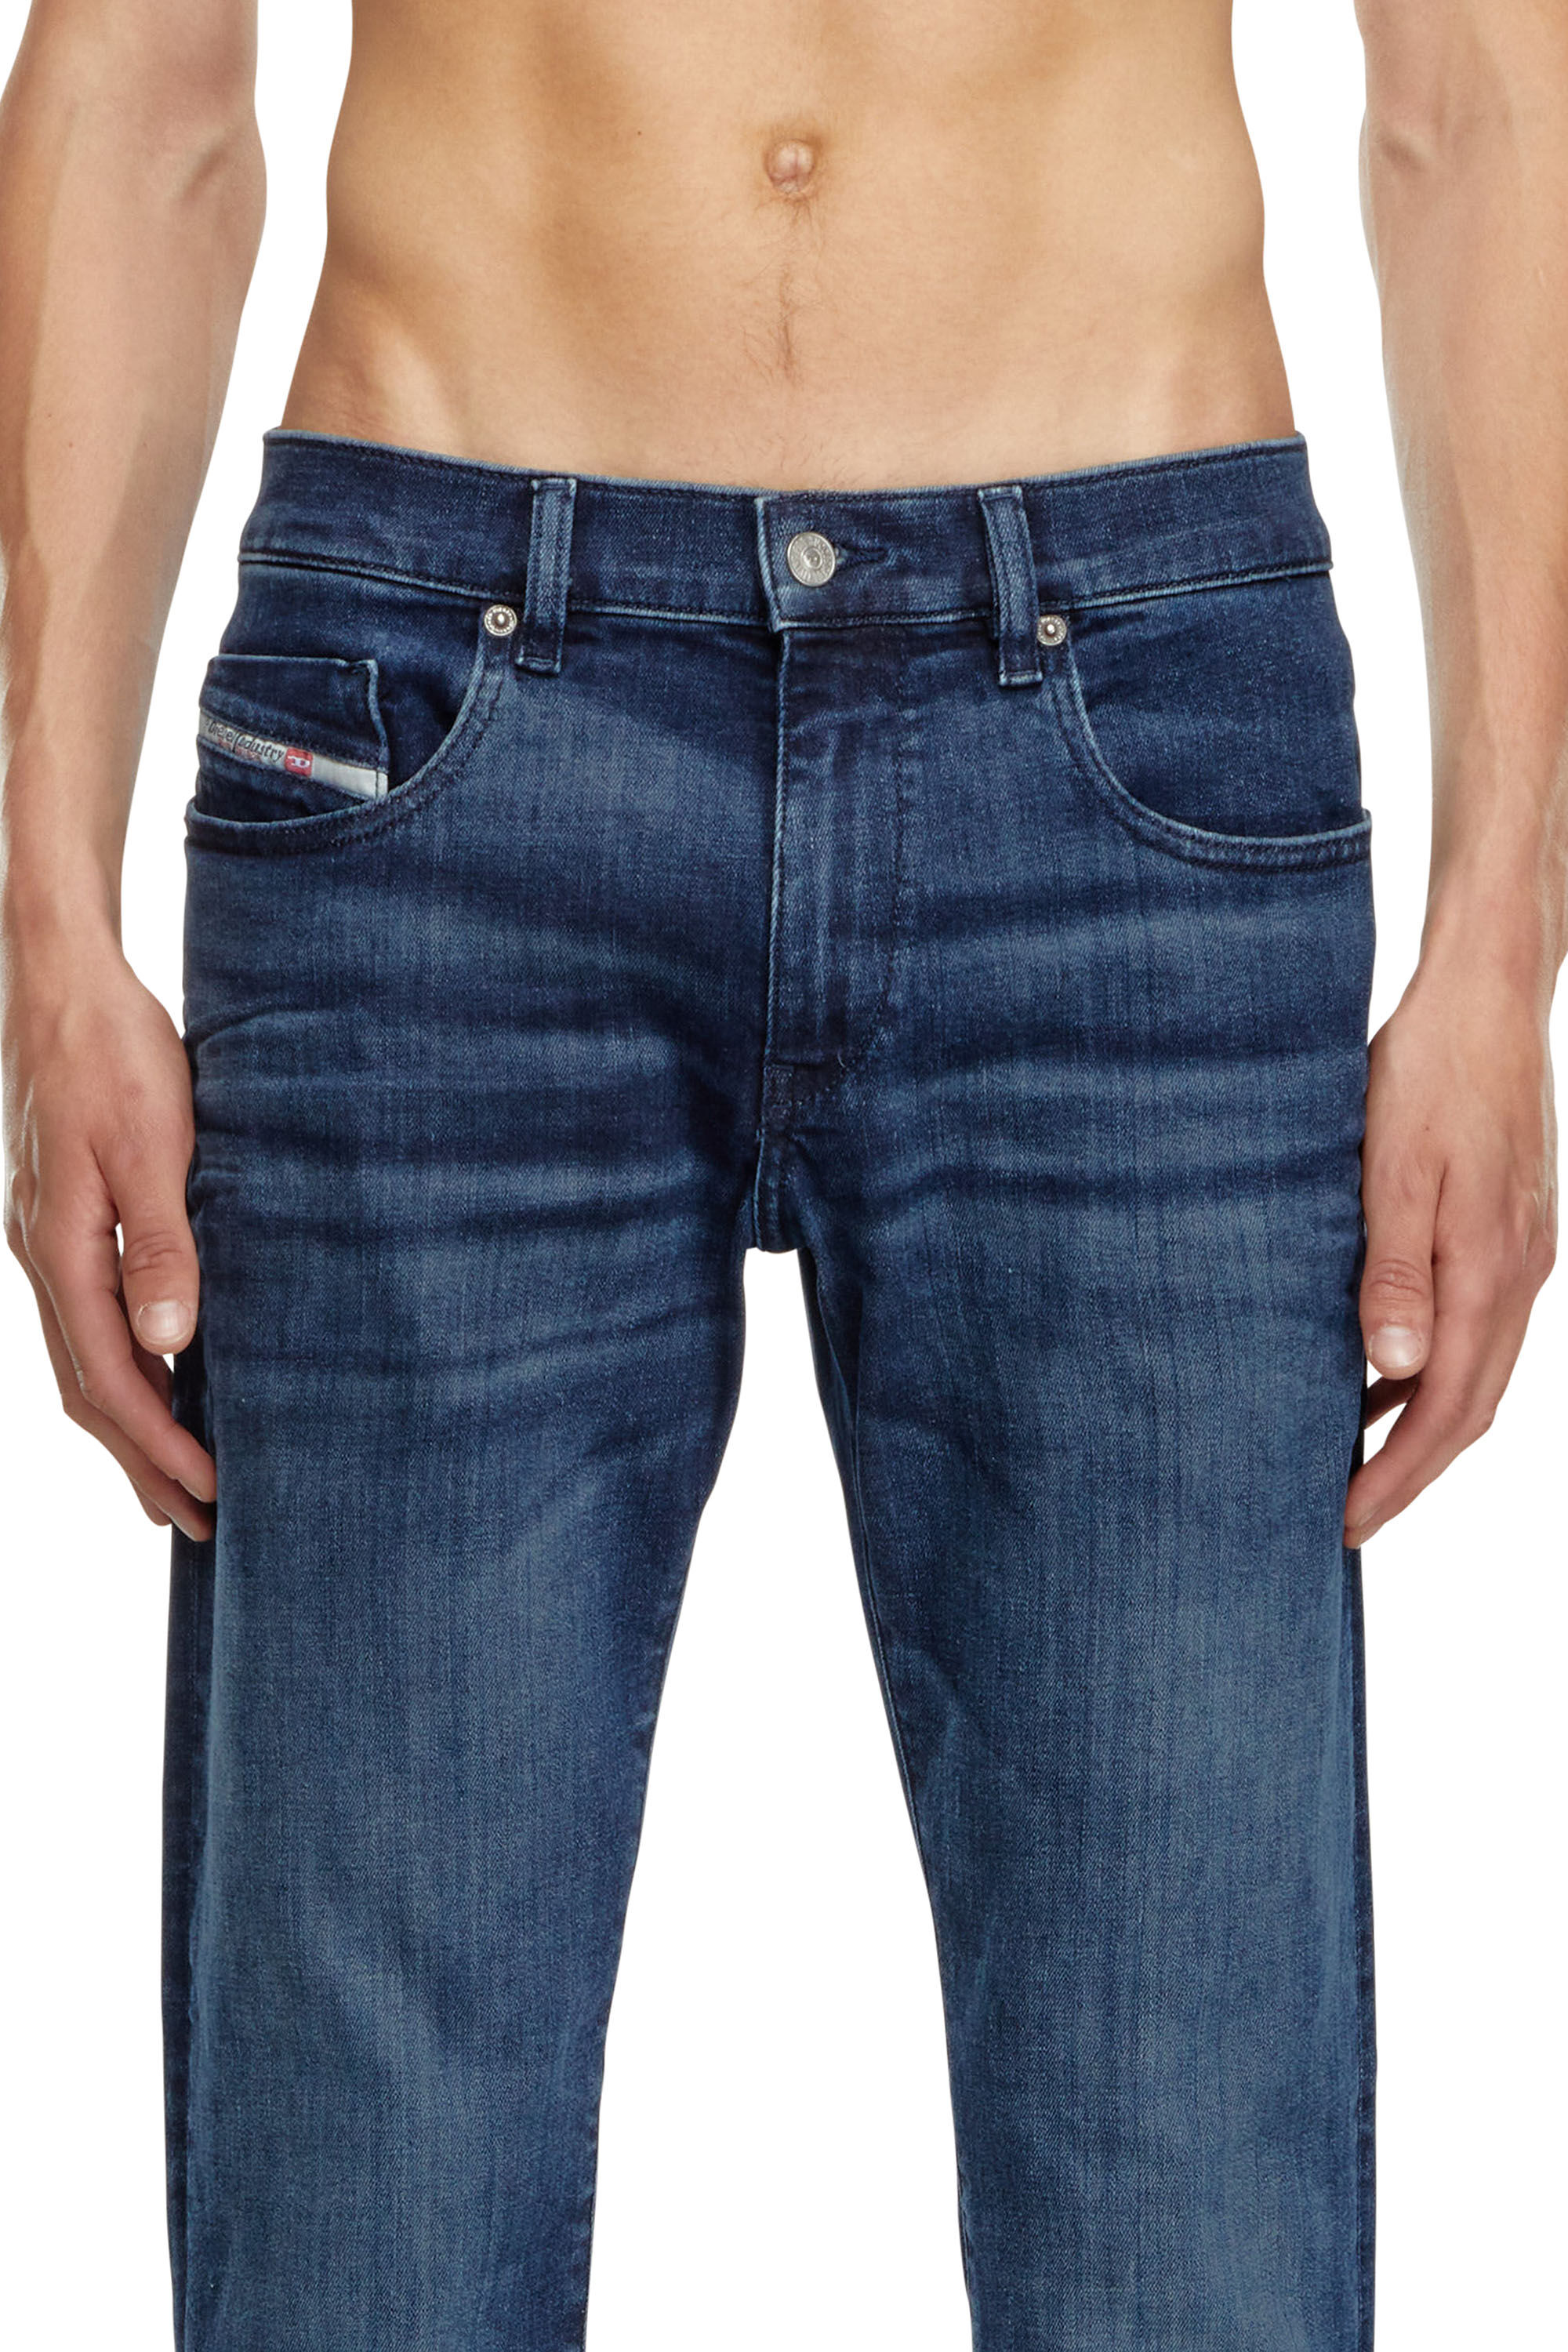 Diesel - Slim Jeans 2019 D-Strukt 0GRDJ, Hombre Slim Jeans - 2019 D-Strukt in Azul marino - Image 5